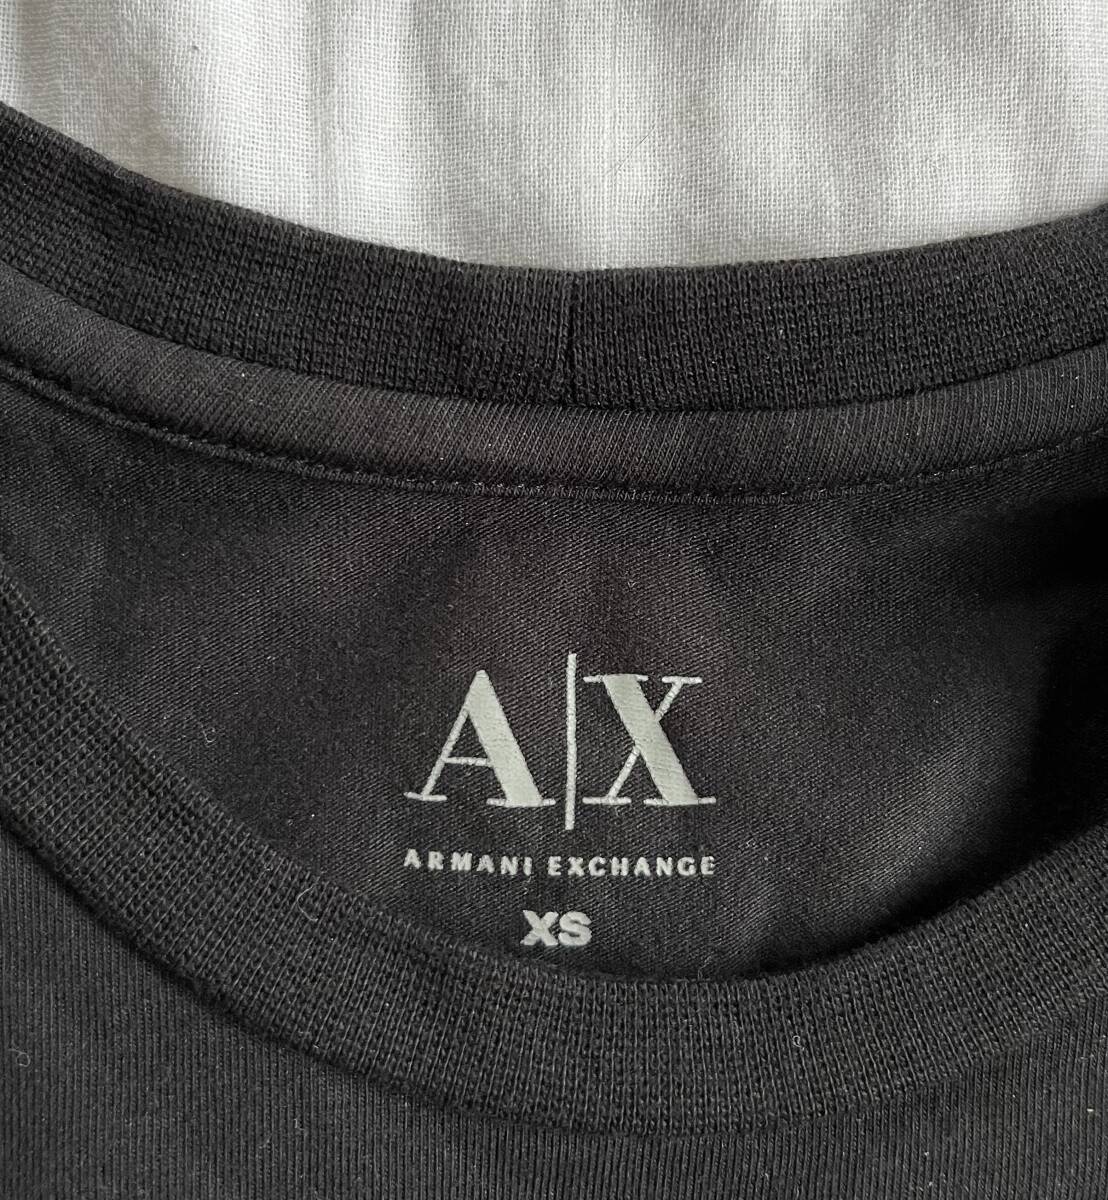  Armani Exchange футболка короткий рукав Logo чёрный стандартный tops мужской XS размер 